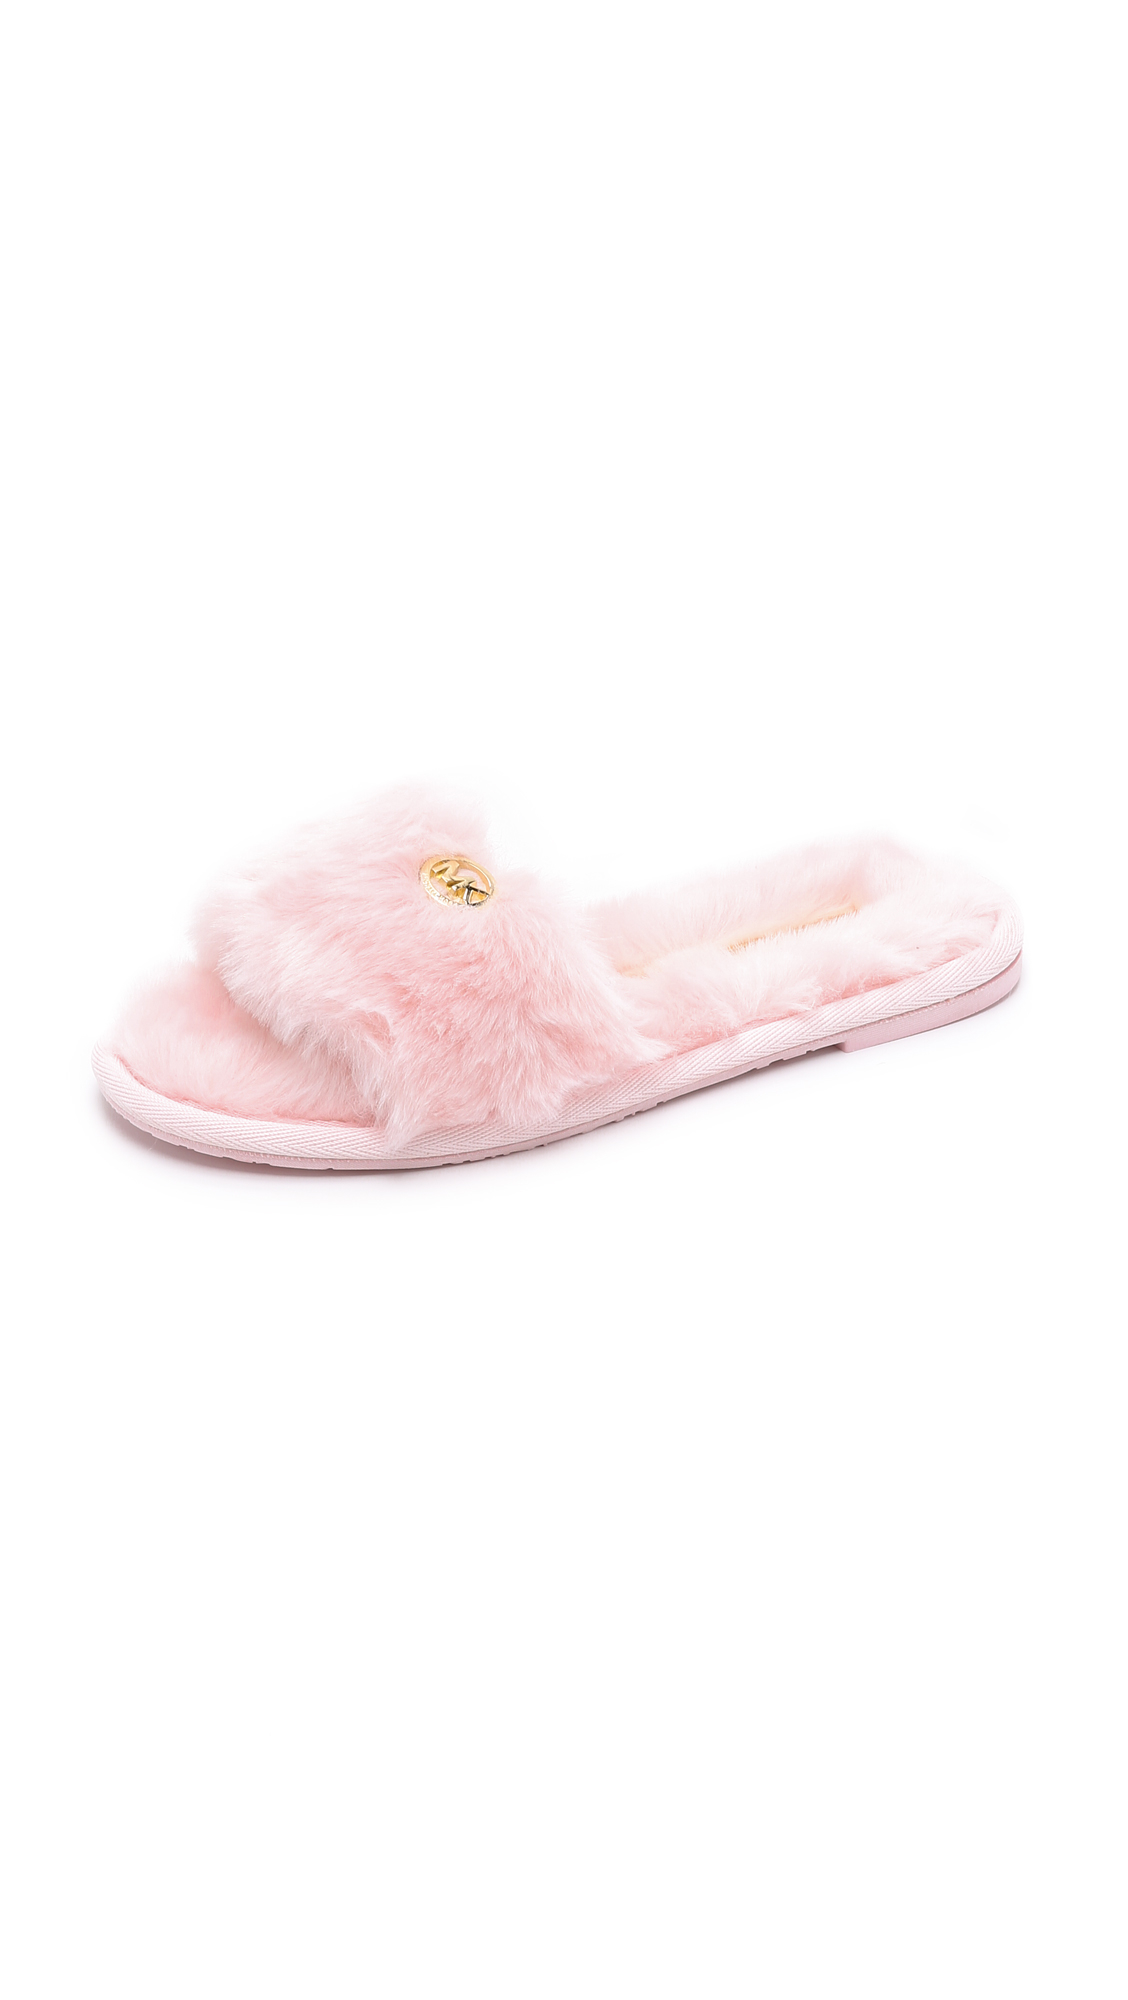 michael kors fuzzy slippers